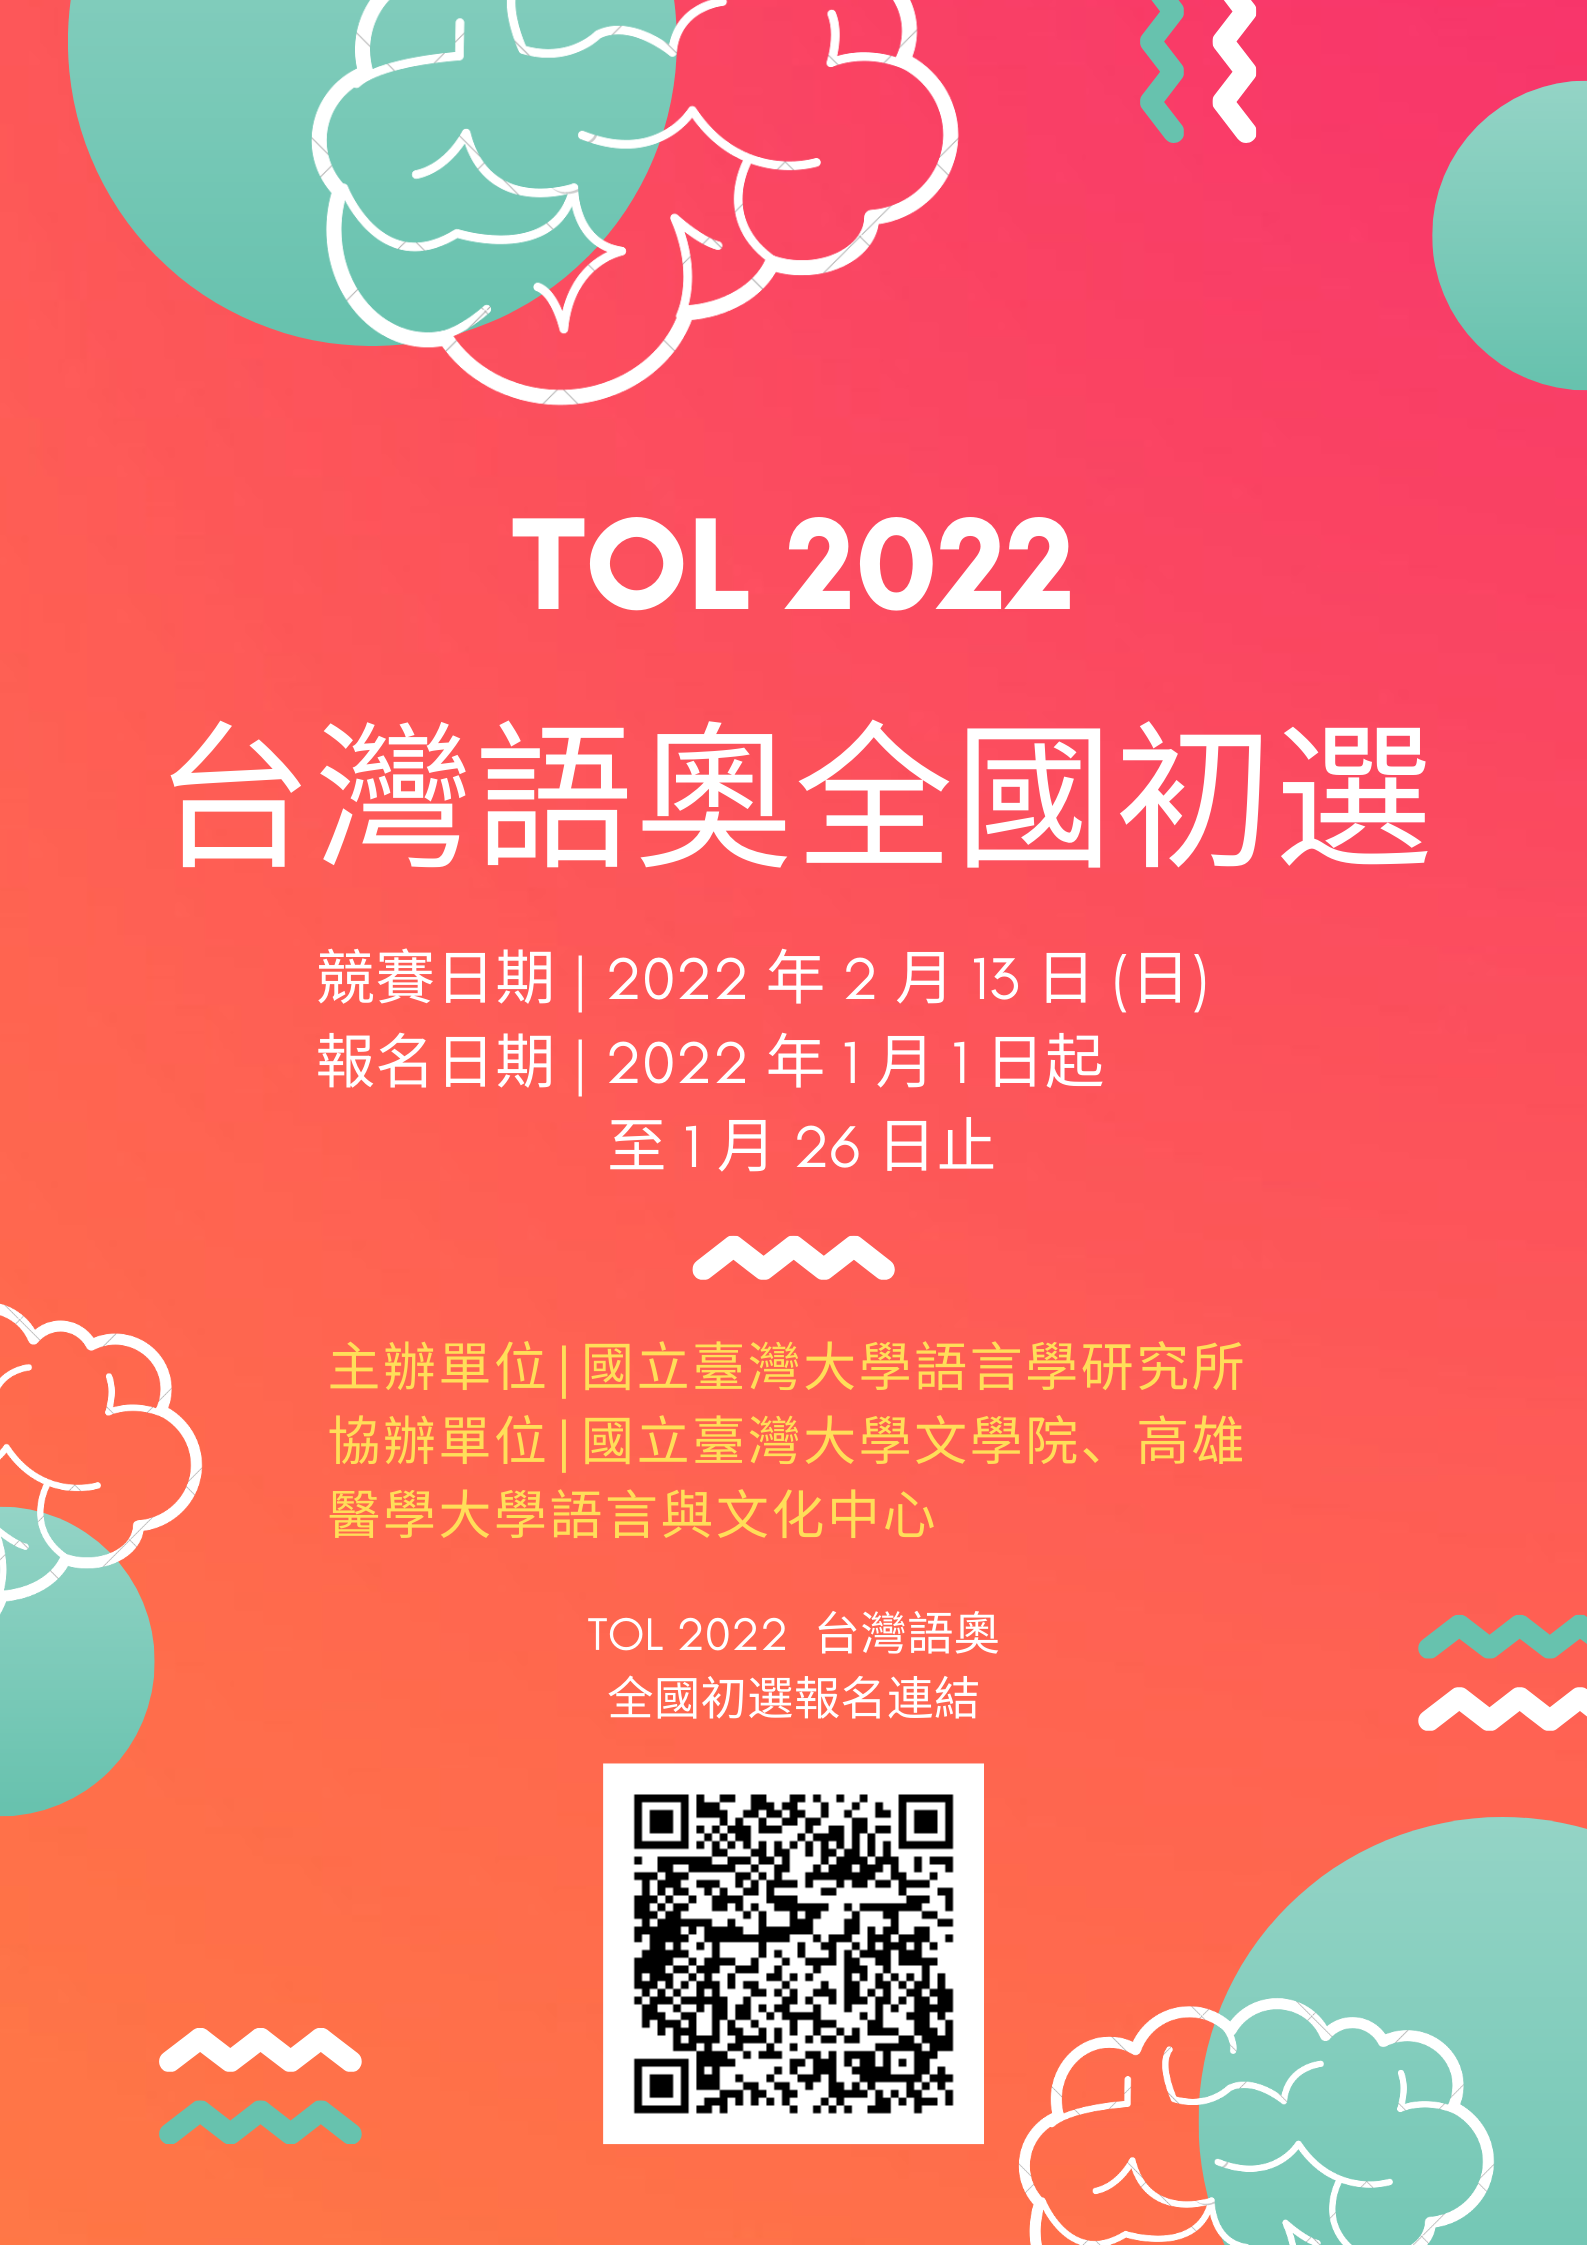 TOL 2022 poster